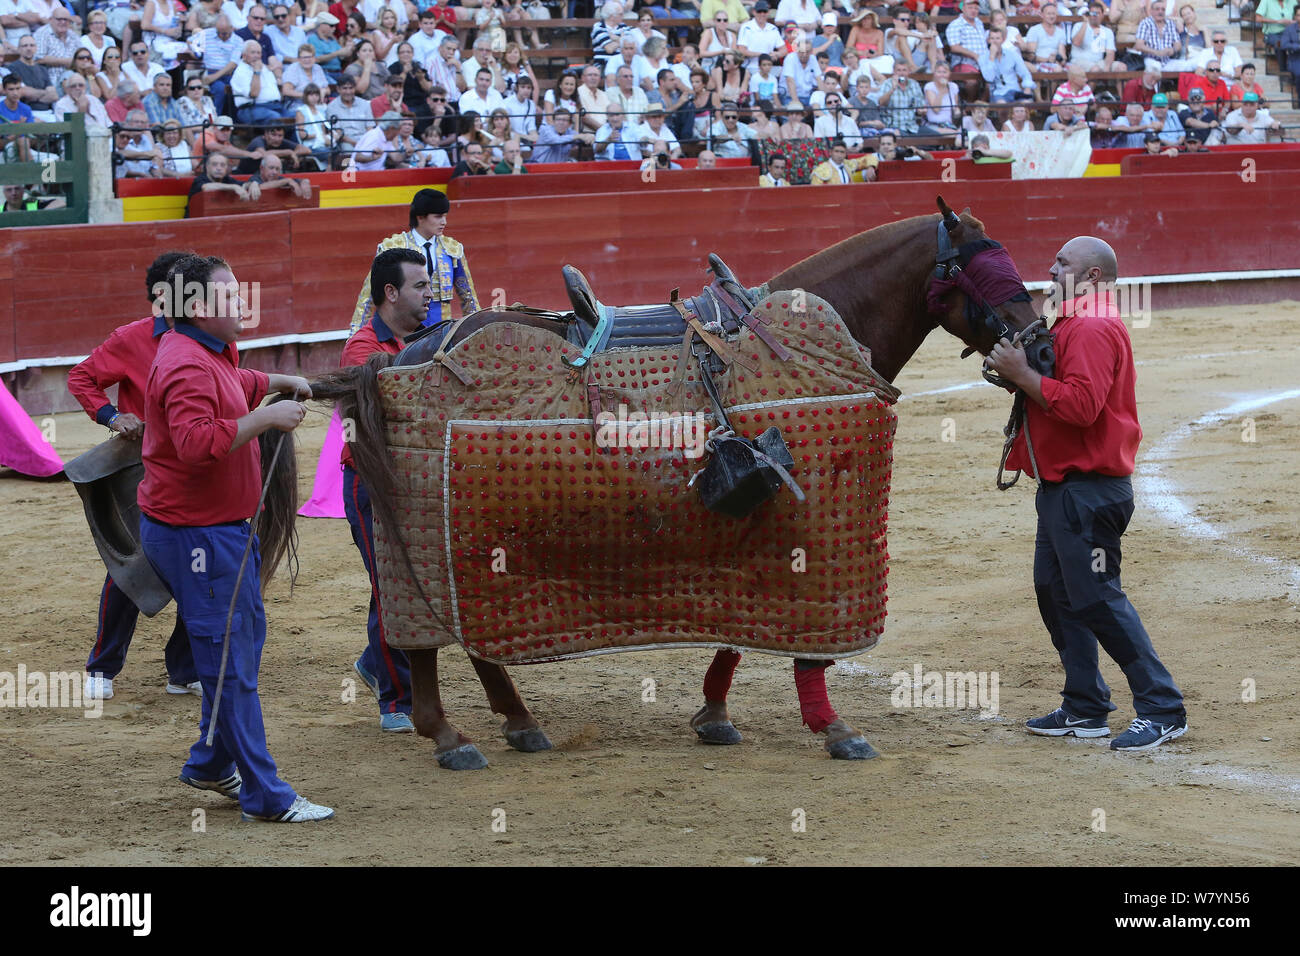 Le port de cheval &# 39;peto&# 39 ; matières au cours de la première ronde de la corrida,Tercio de Varas, Plaza de Toros, Valencia, Espagne, juillet 2014. Banque D'Images